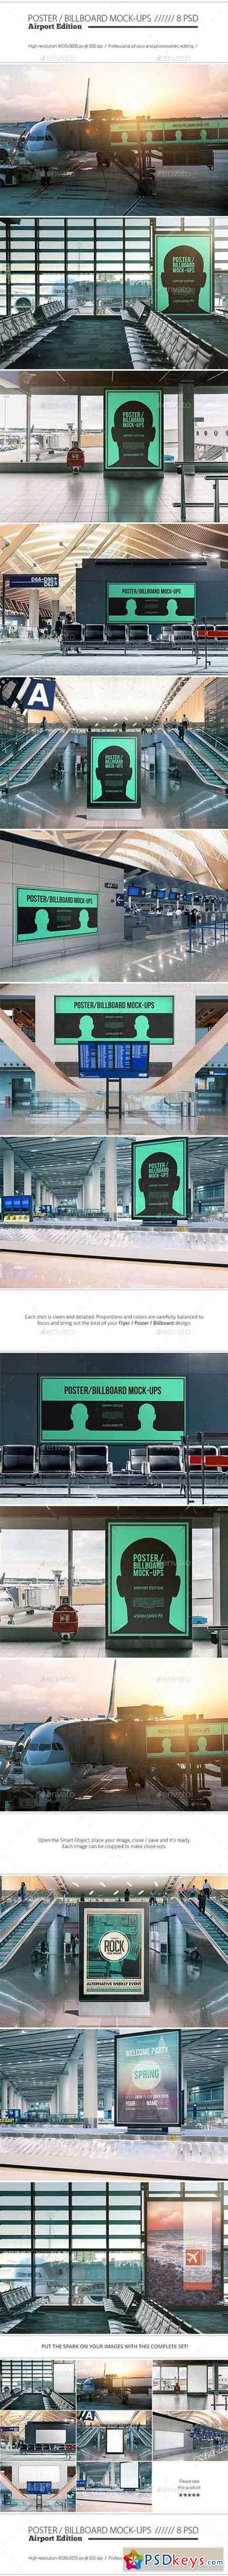 Poster Billboard Mock-ups - Airport Edition 12875743